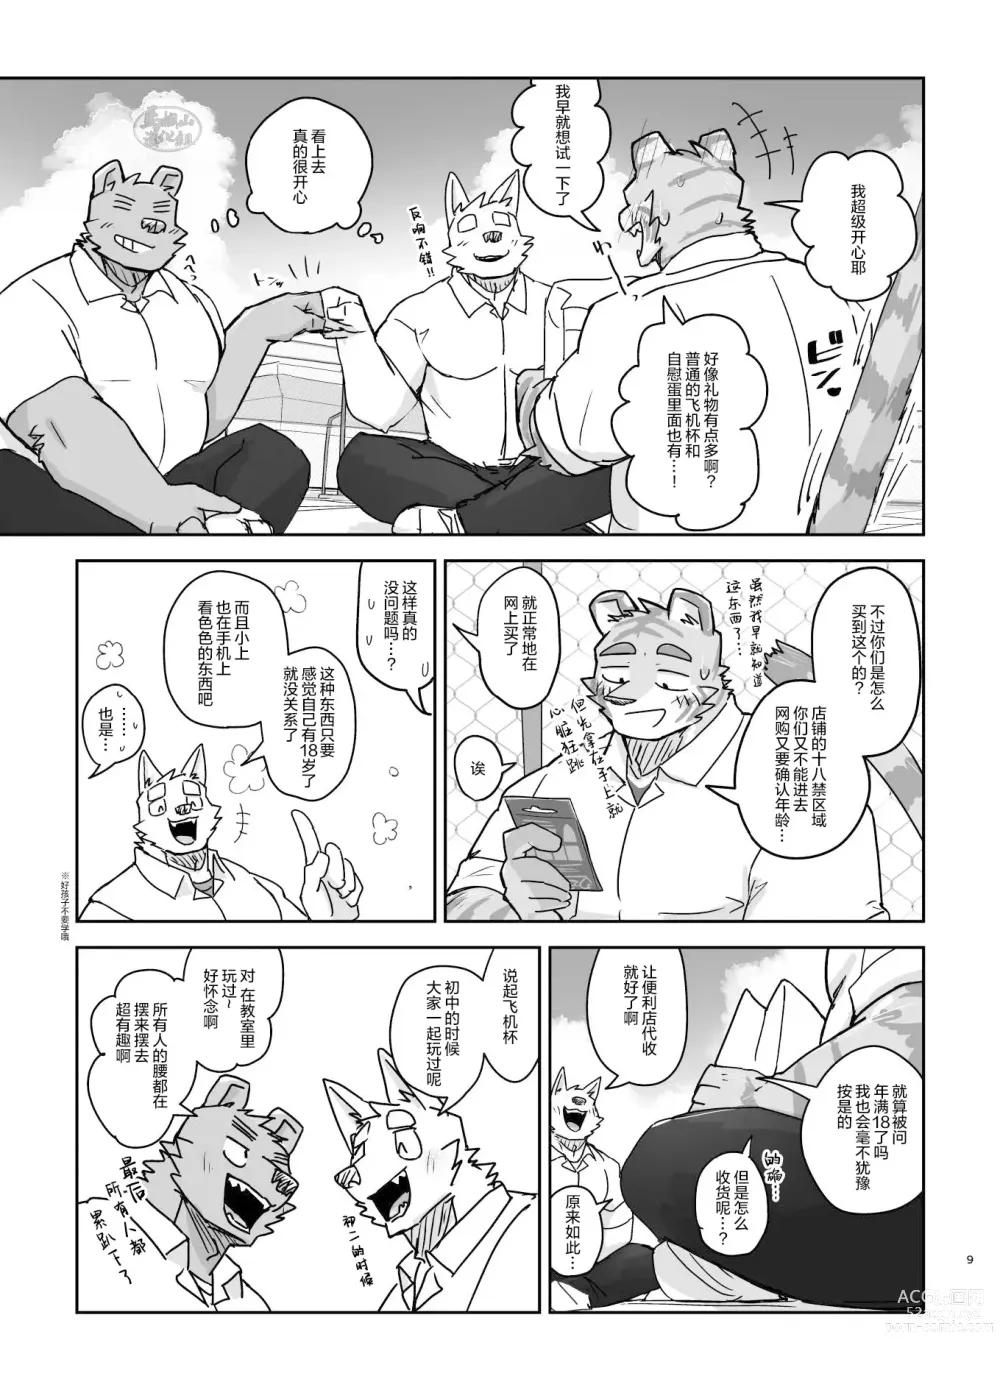 Page 9 of doujinshi 关于我在教室被榨精这件事